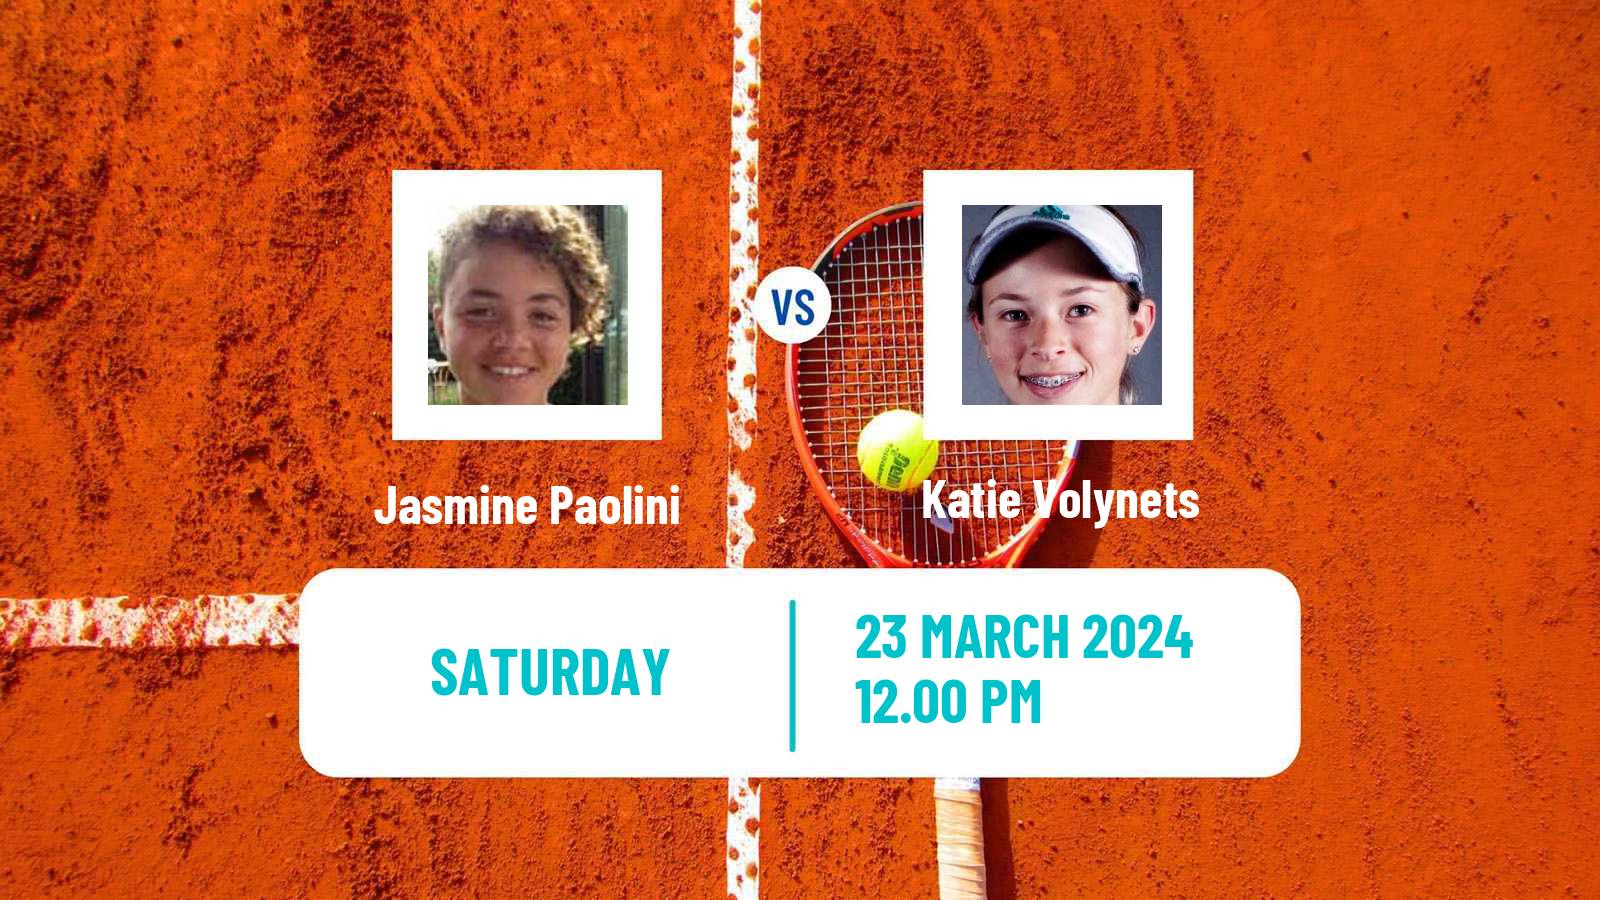 Tennis WTA Miami Jasmine Paolini - Katie Volynets